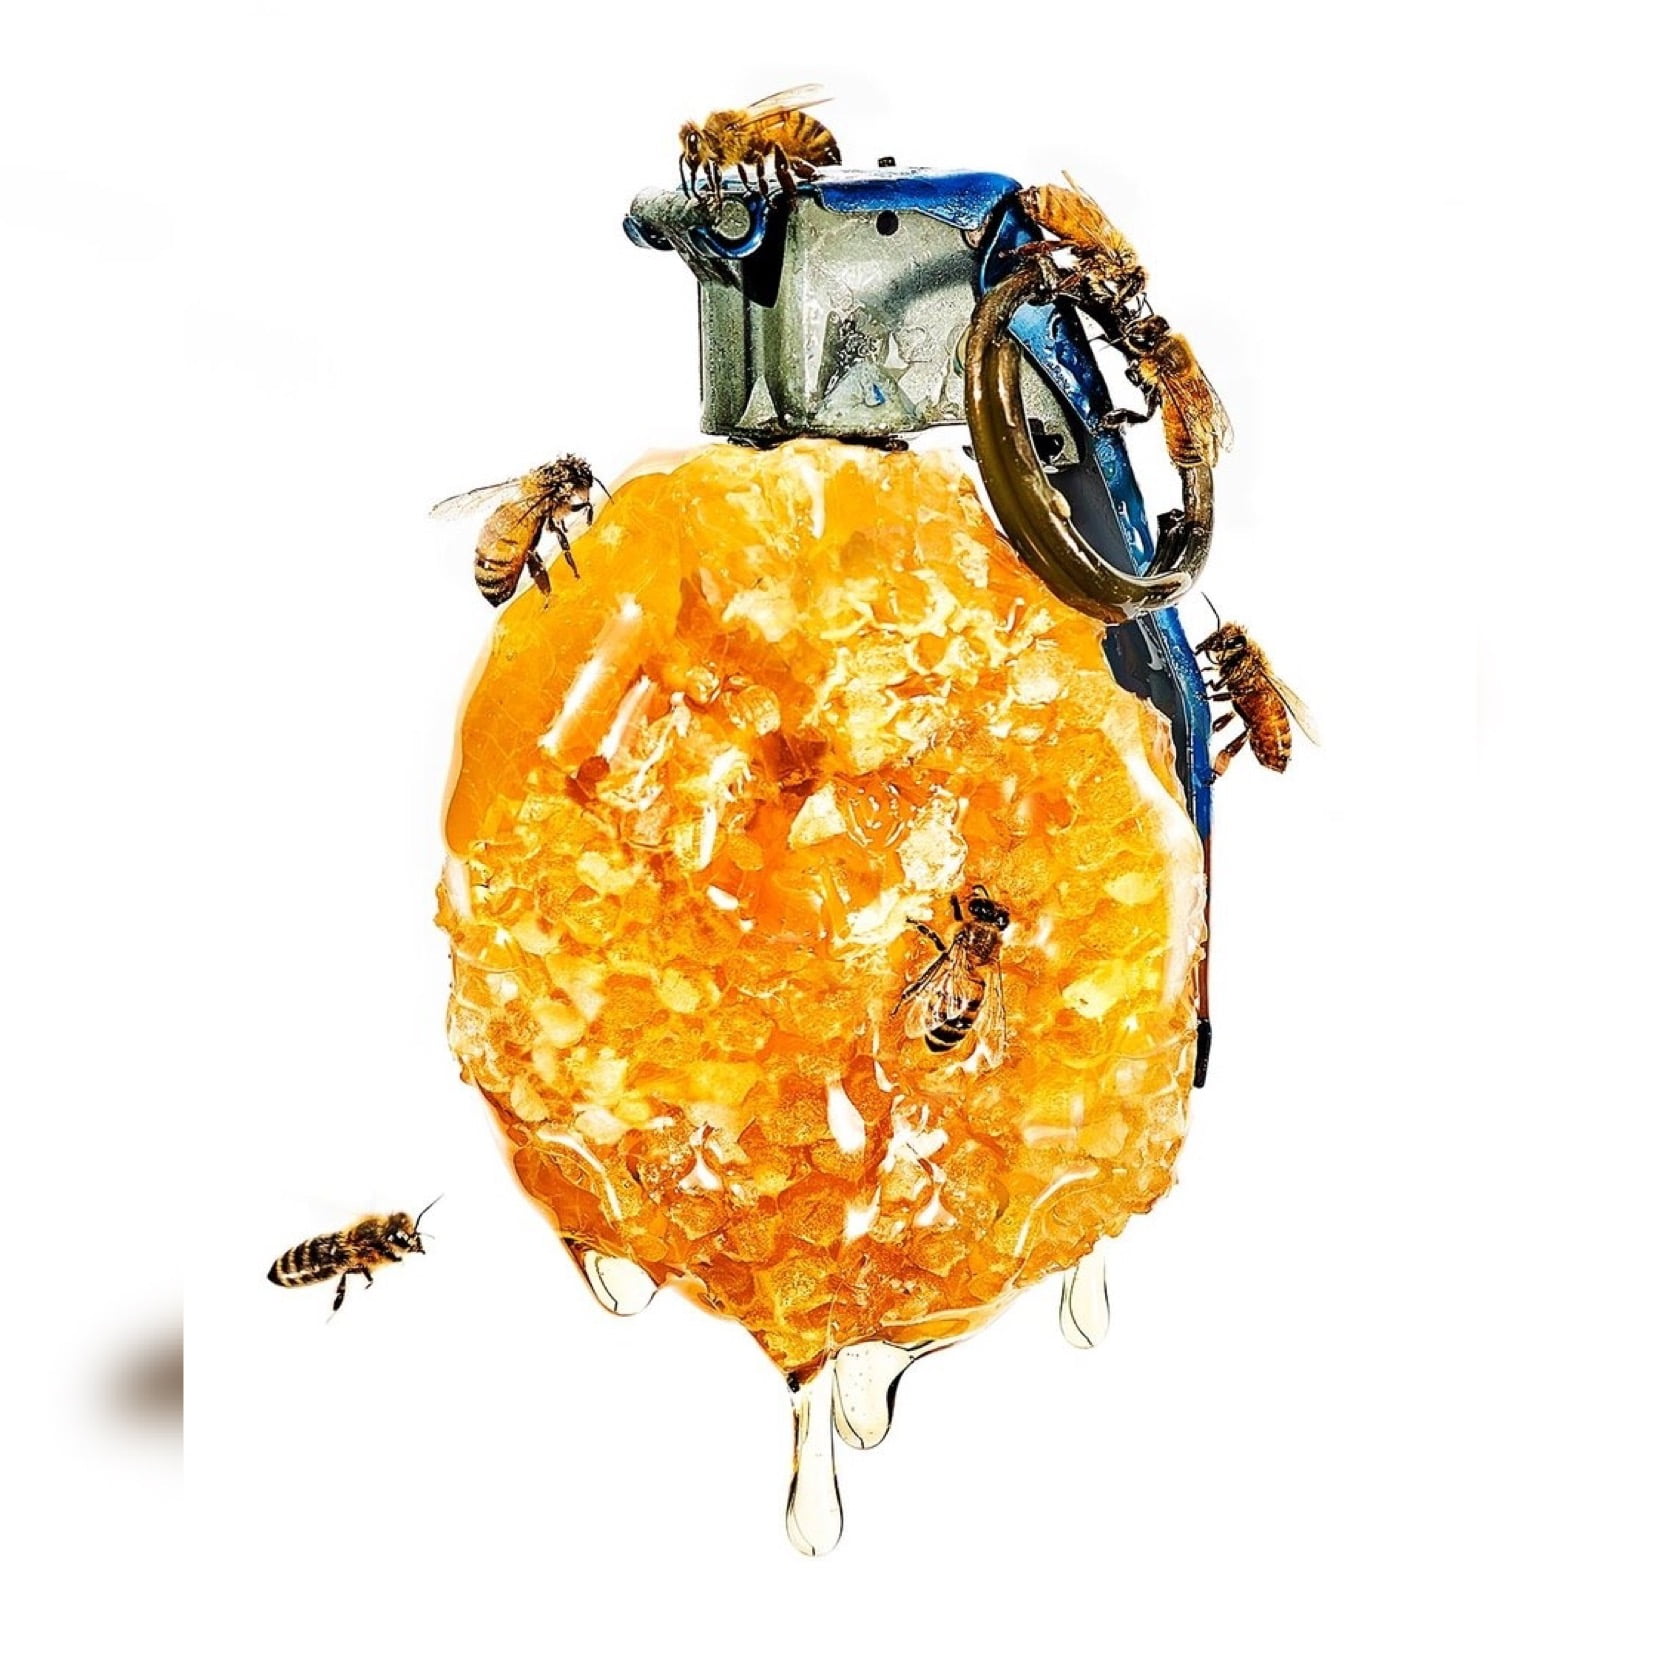 Matt McKey Honey Doo! Image by VENMARK INTERNATIONAL for use by 360 Magazine